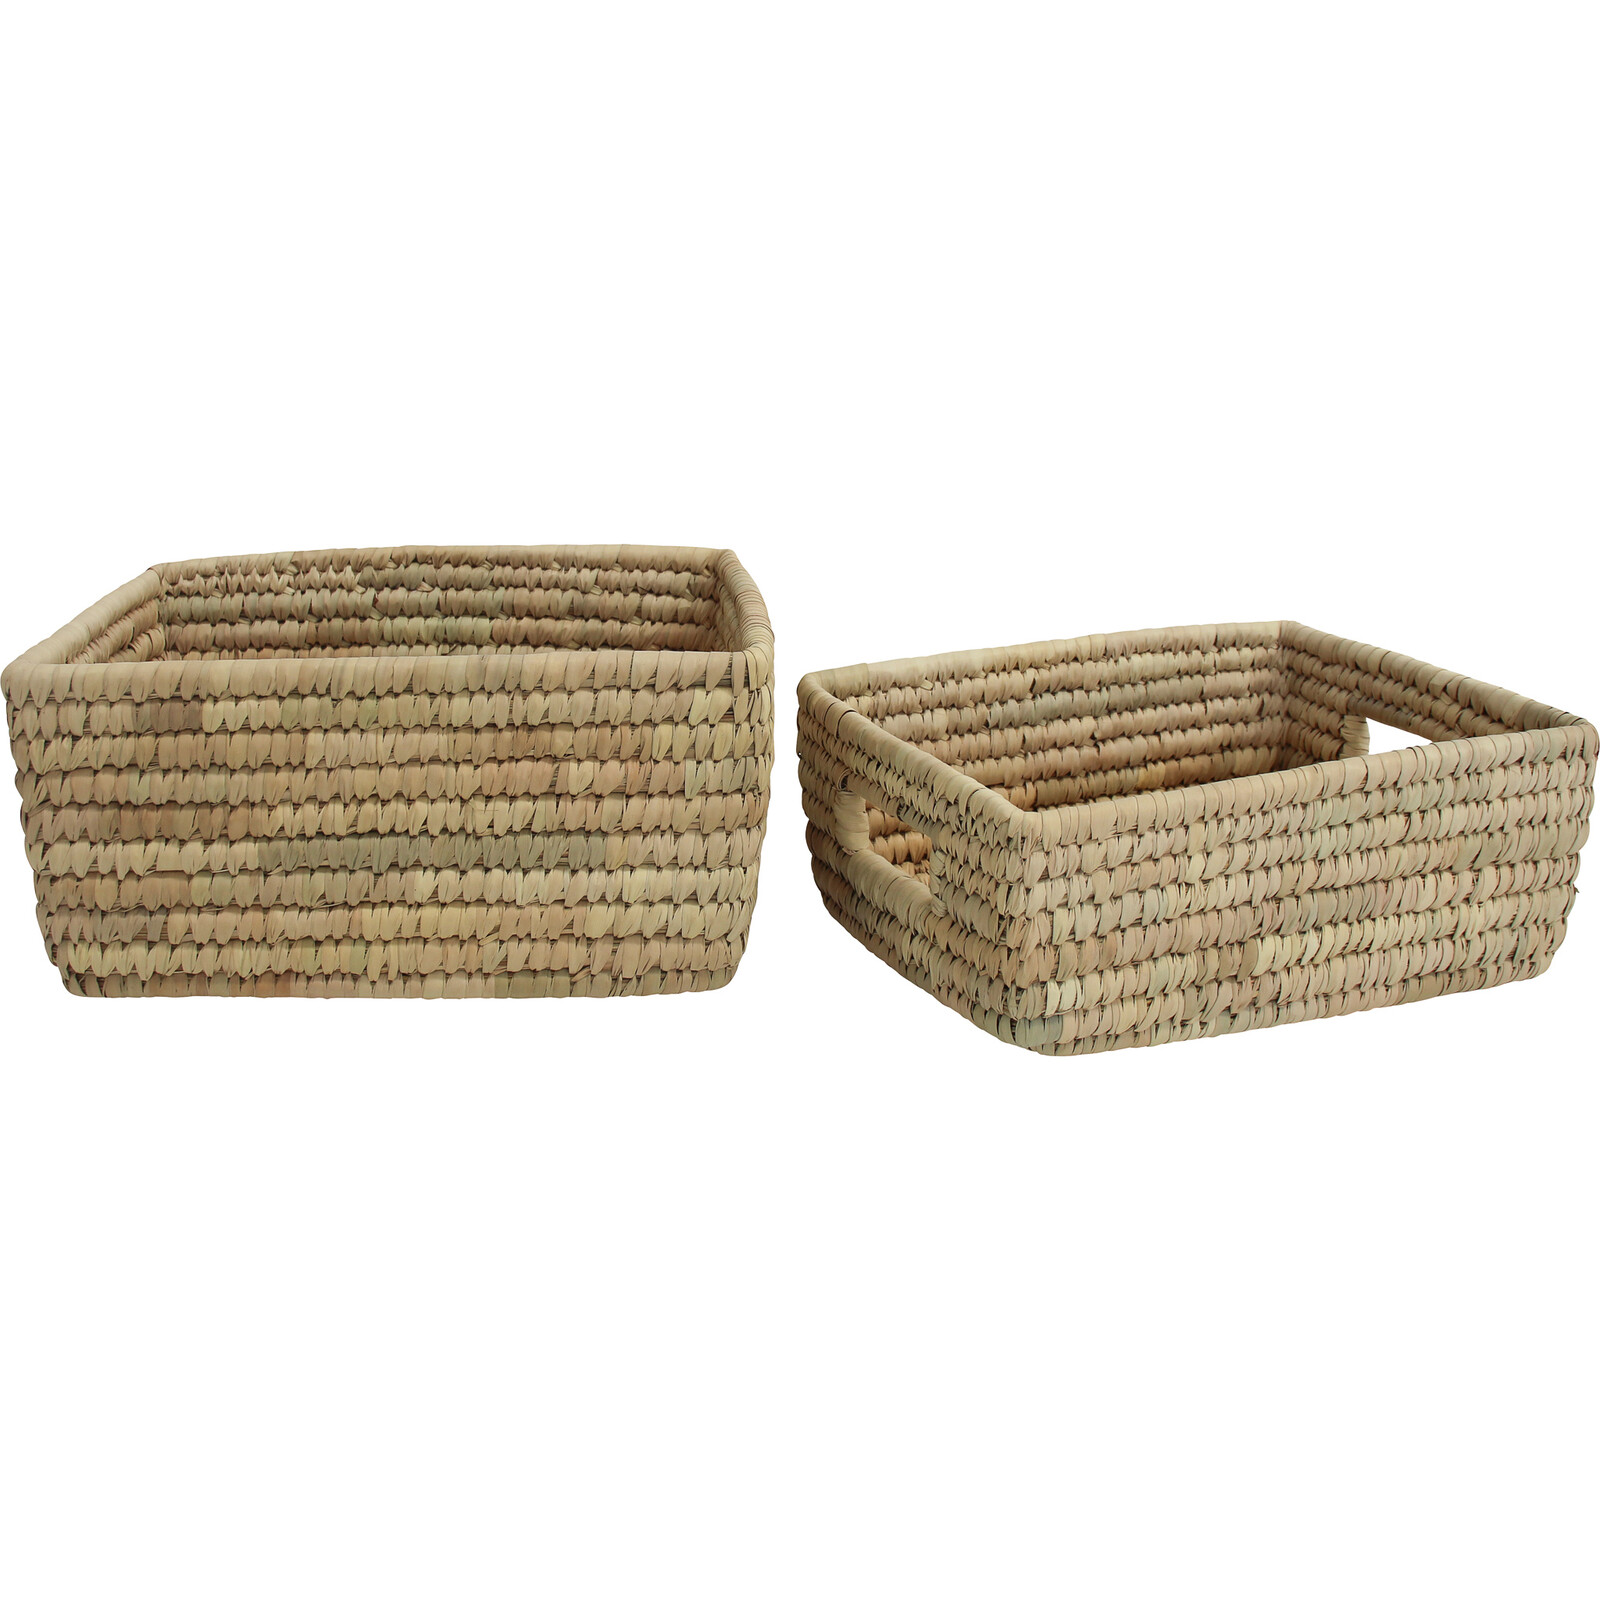 Basket Storage Date Leaf S/2